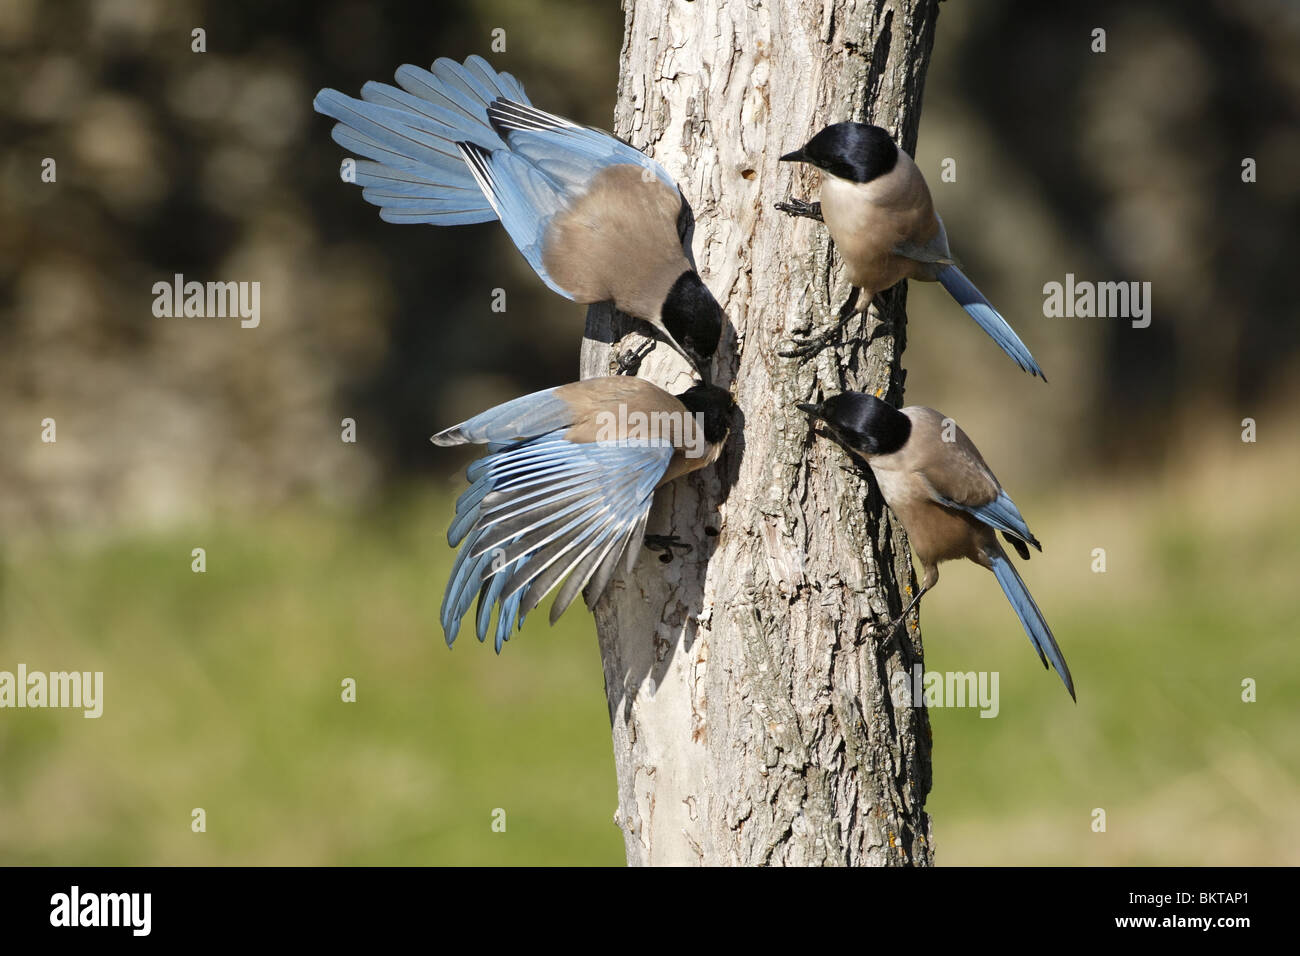 Blauwe Eksters fouragerend op kurkeik( Quercus suber) ; azzurro-winged Magpie di alimentazione sulla quercia da sughero Foto Stock